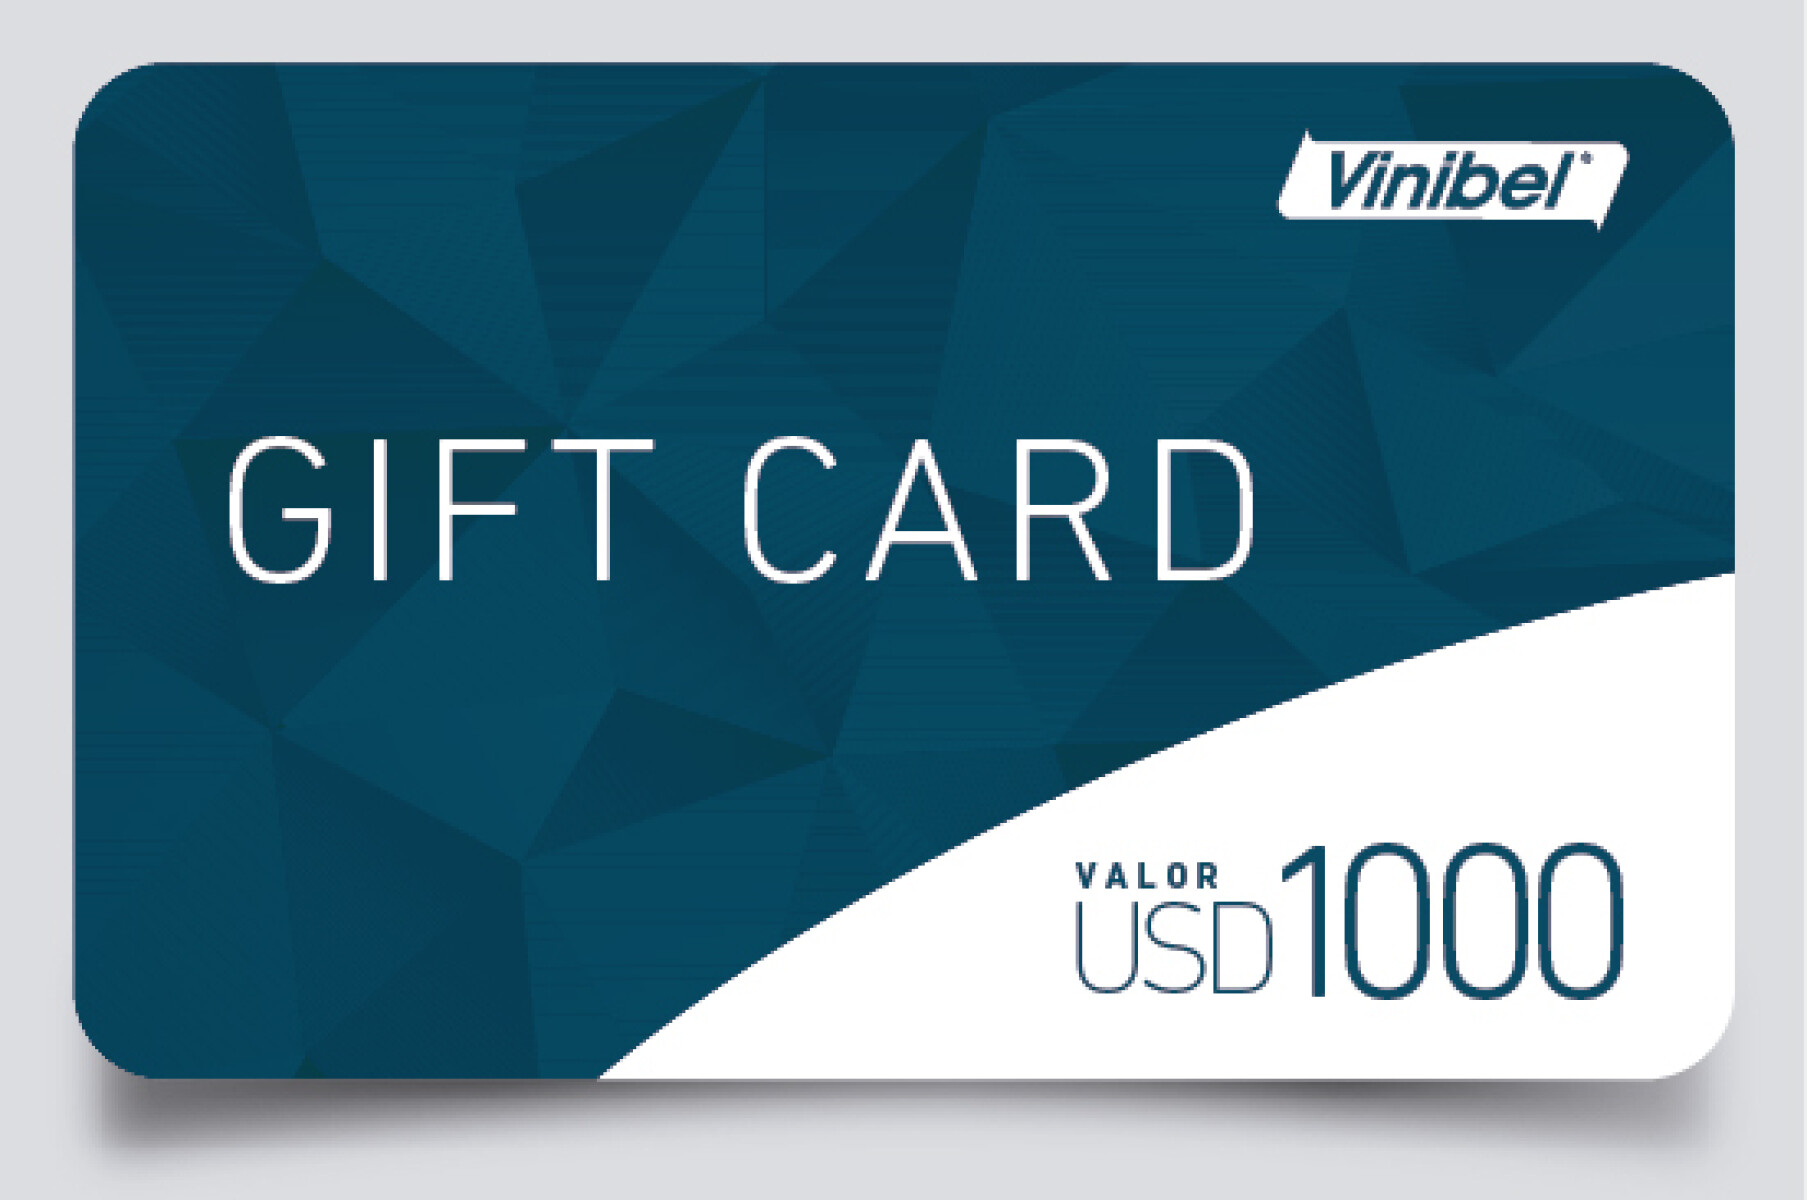 GIFT CARD VINIBEL - TARJETA GIFT CARD VINIBEL U$S 1000 